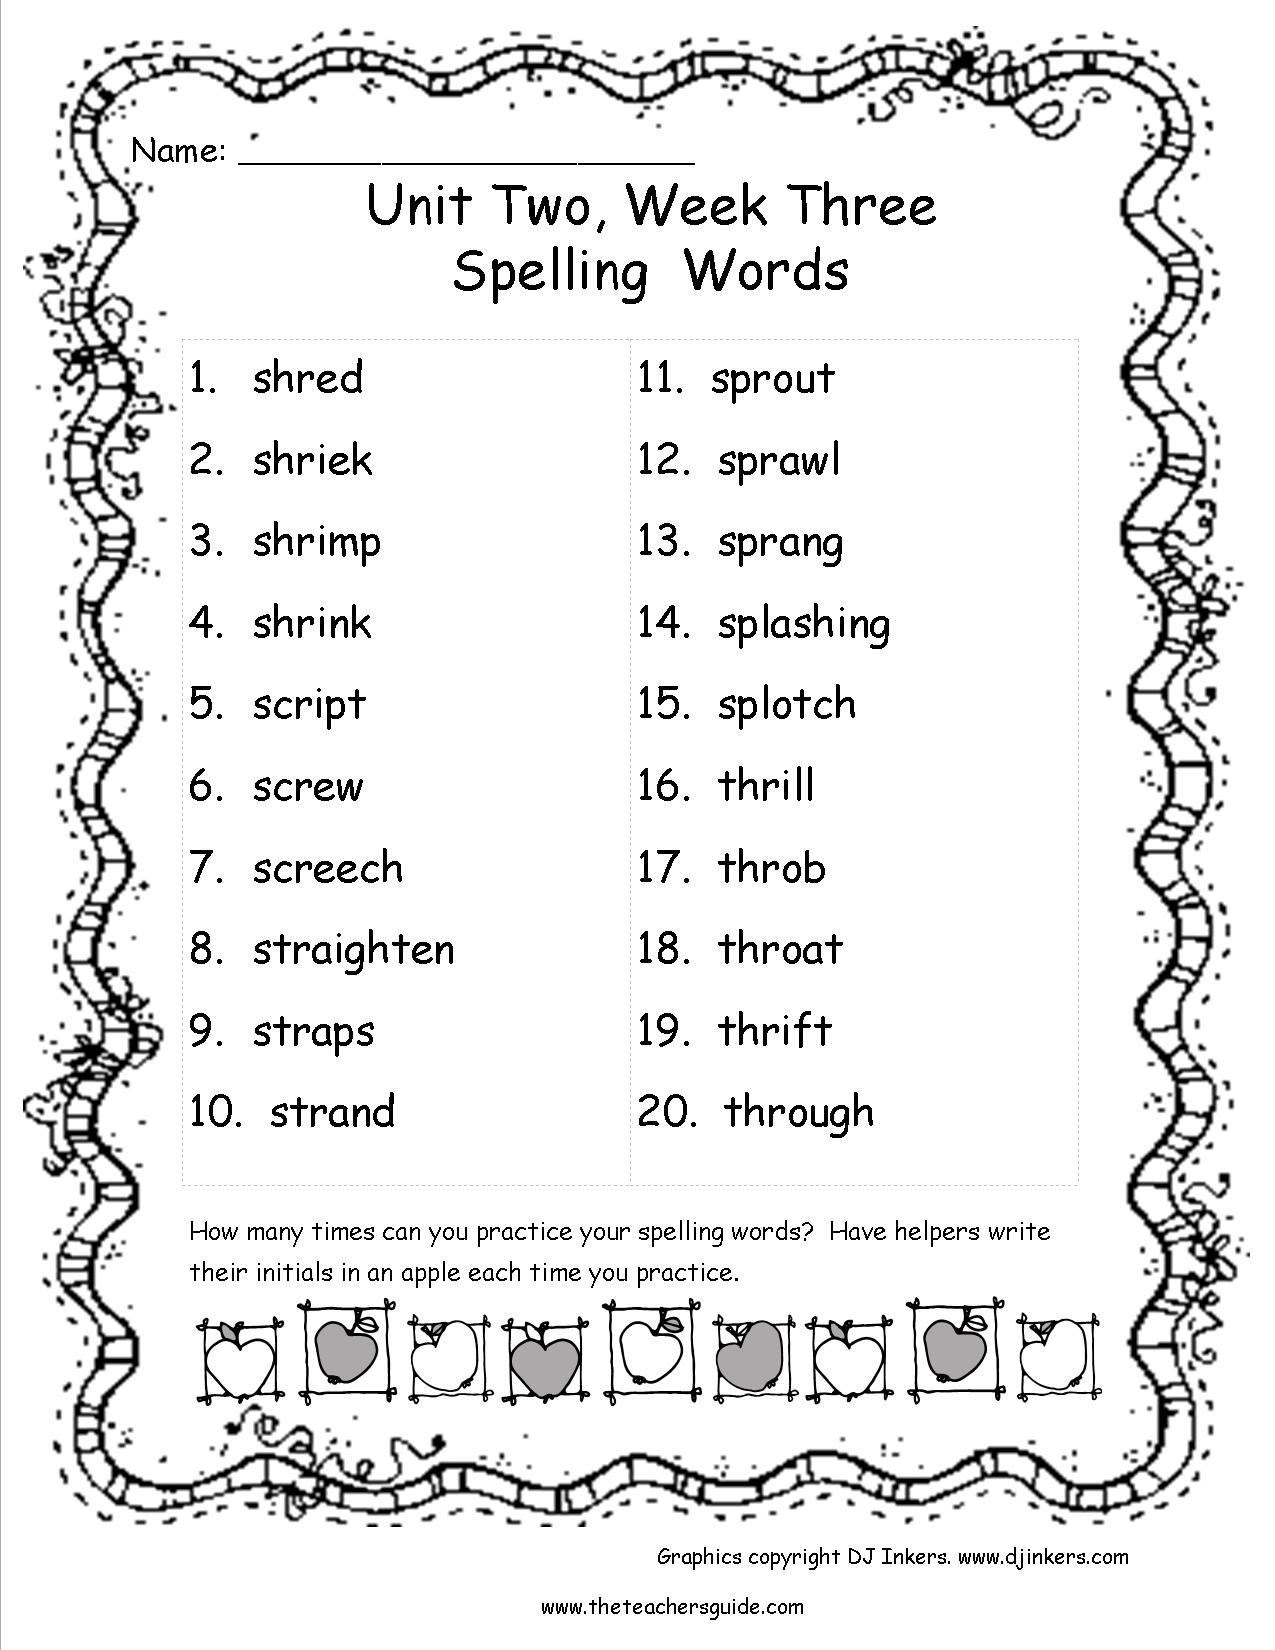 th-grade-spelling-vocabulary-activities-spelling-words-lists